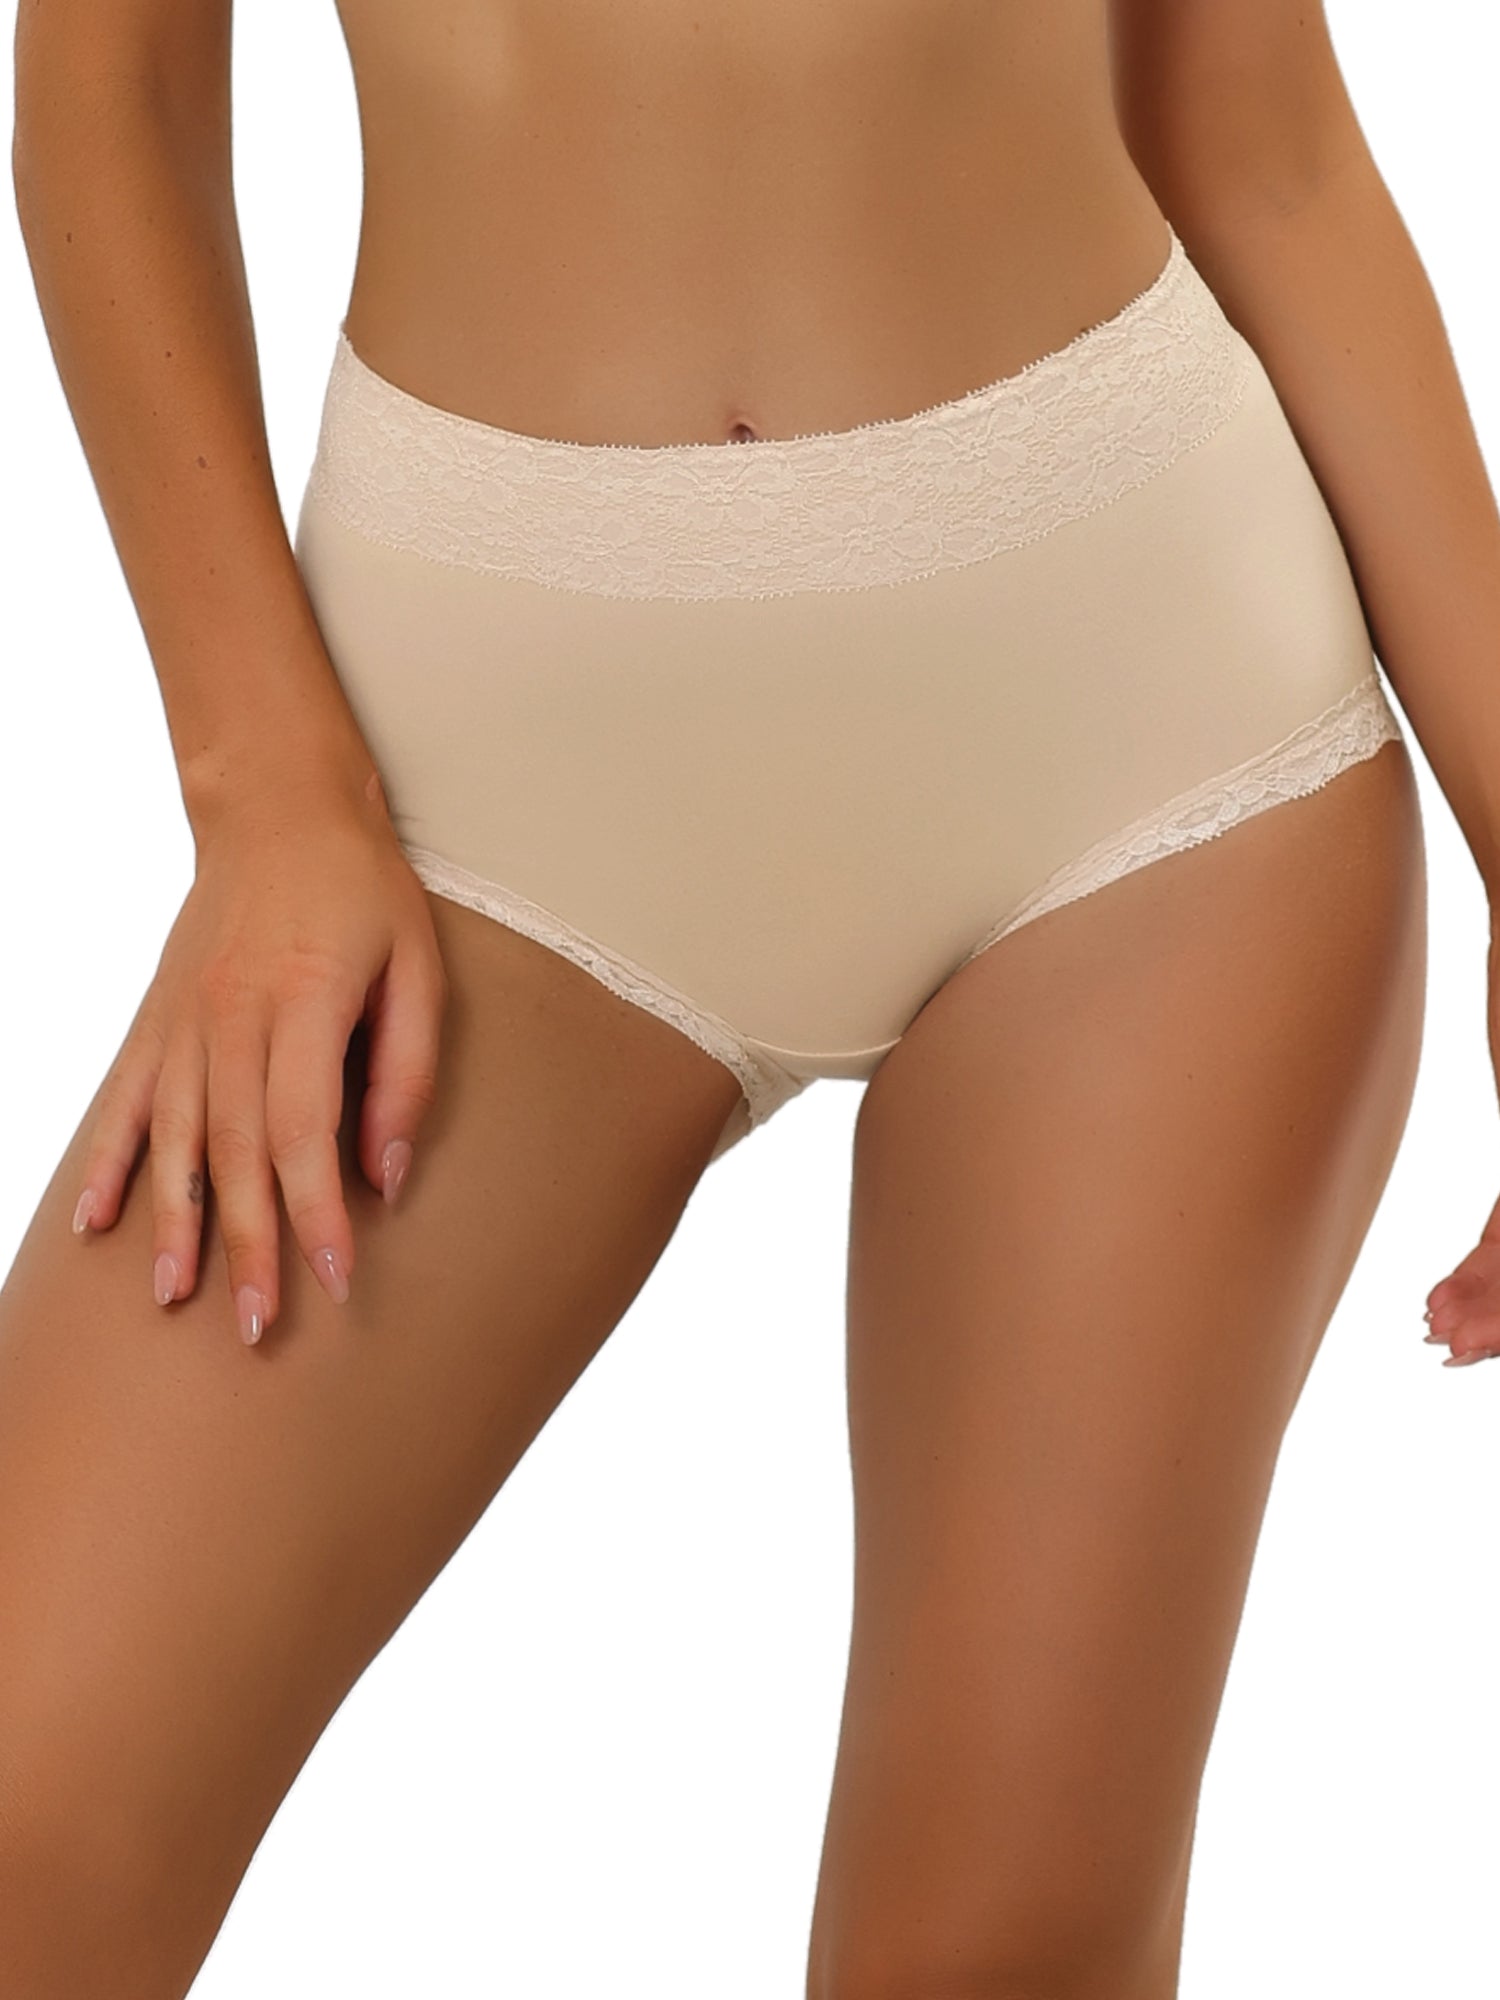 Women's Cotton Underwear High-Rise Lace Trim Tummy Control Full